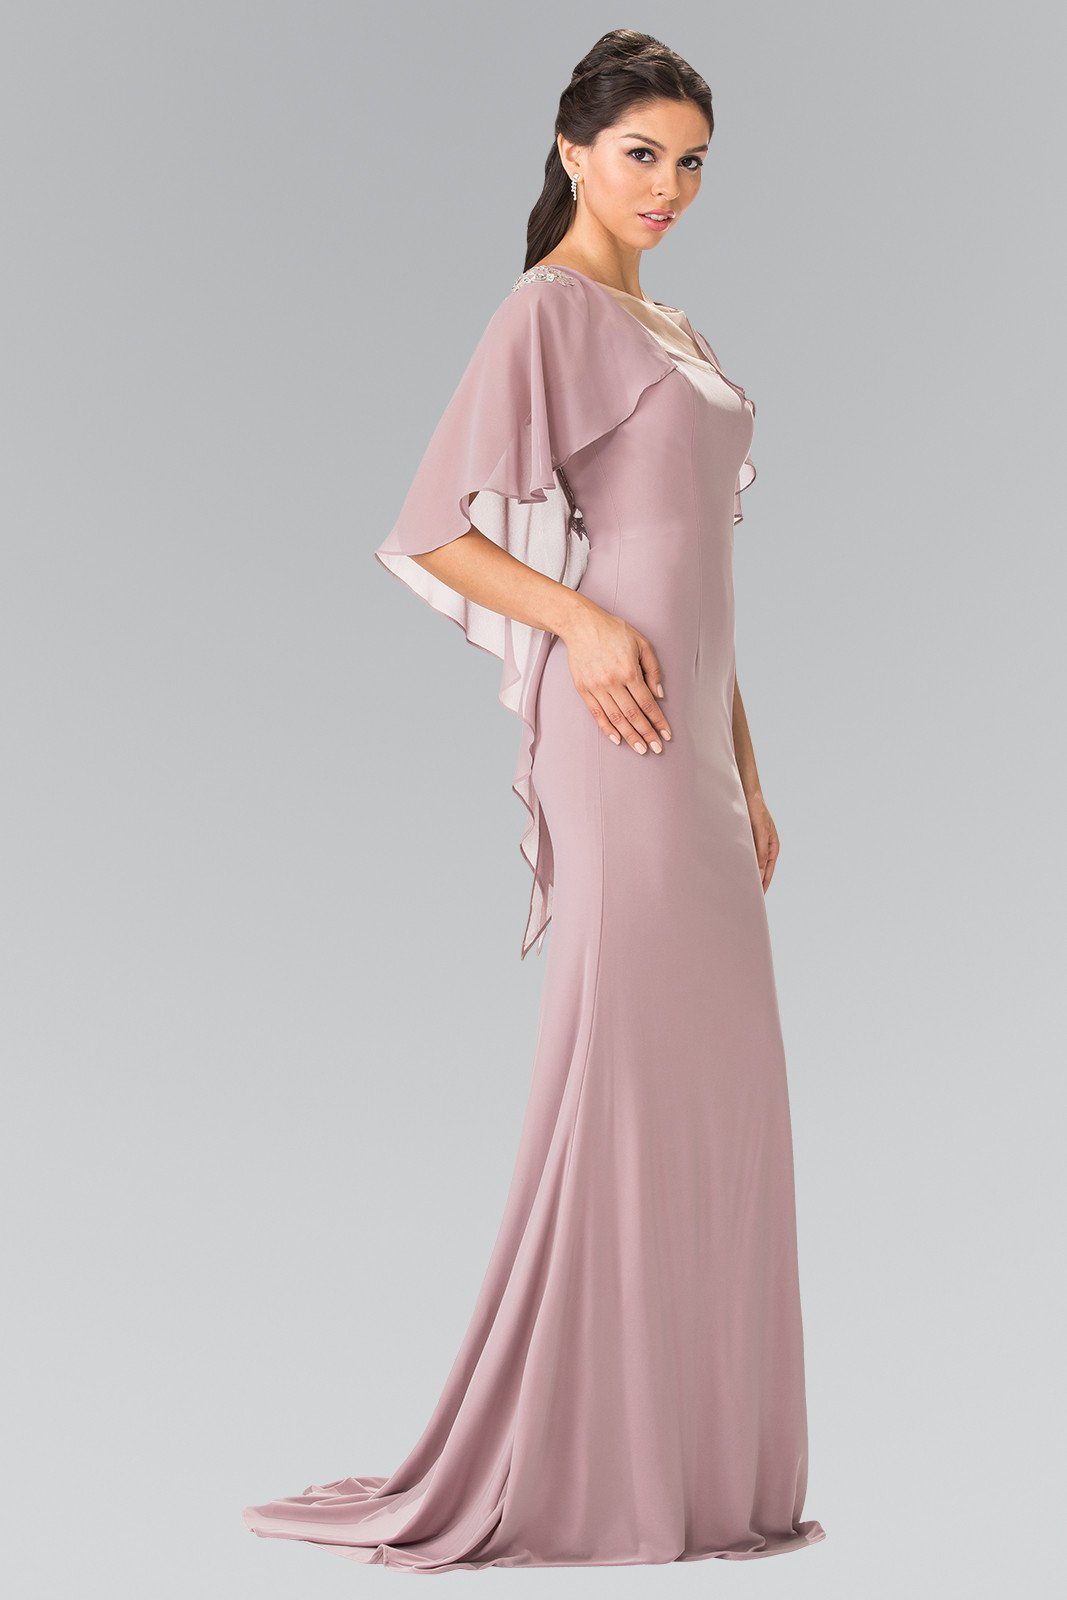 Long Sleeveless Dress with Back Caplet by Elizabeth K GL2254-Long Formal Dresses-ABC Fashion